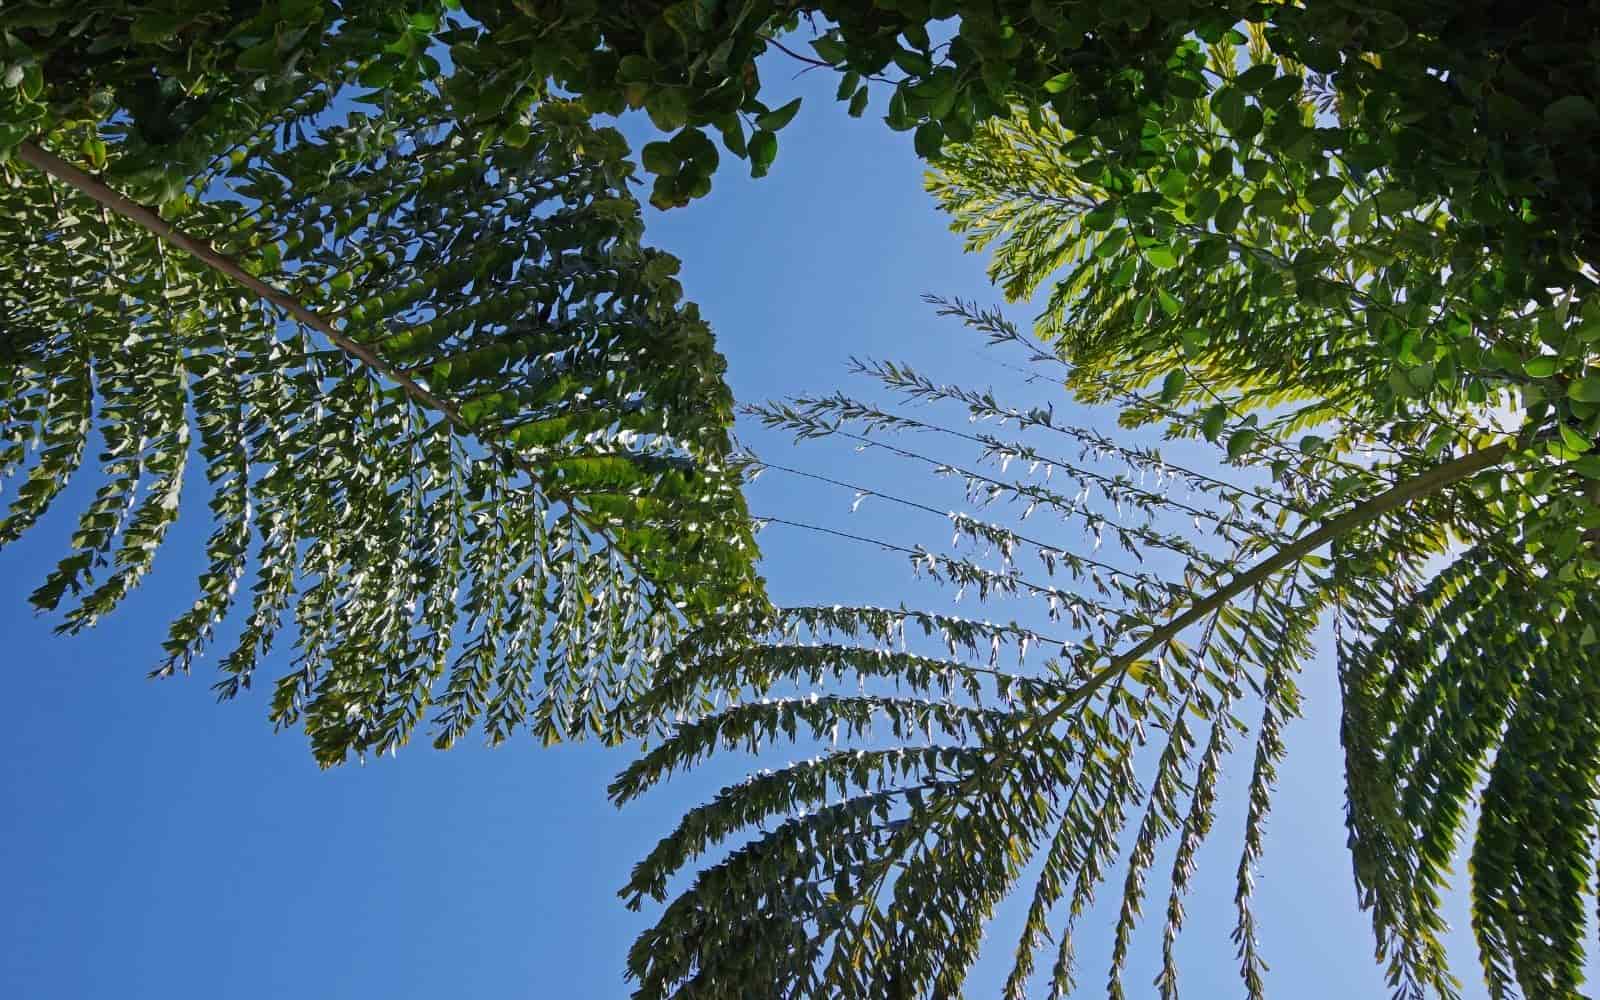 King Kong Fishtail Palm